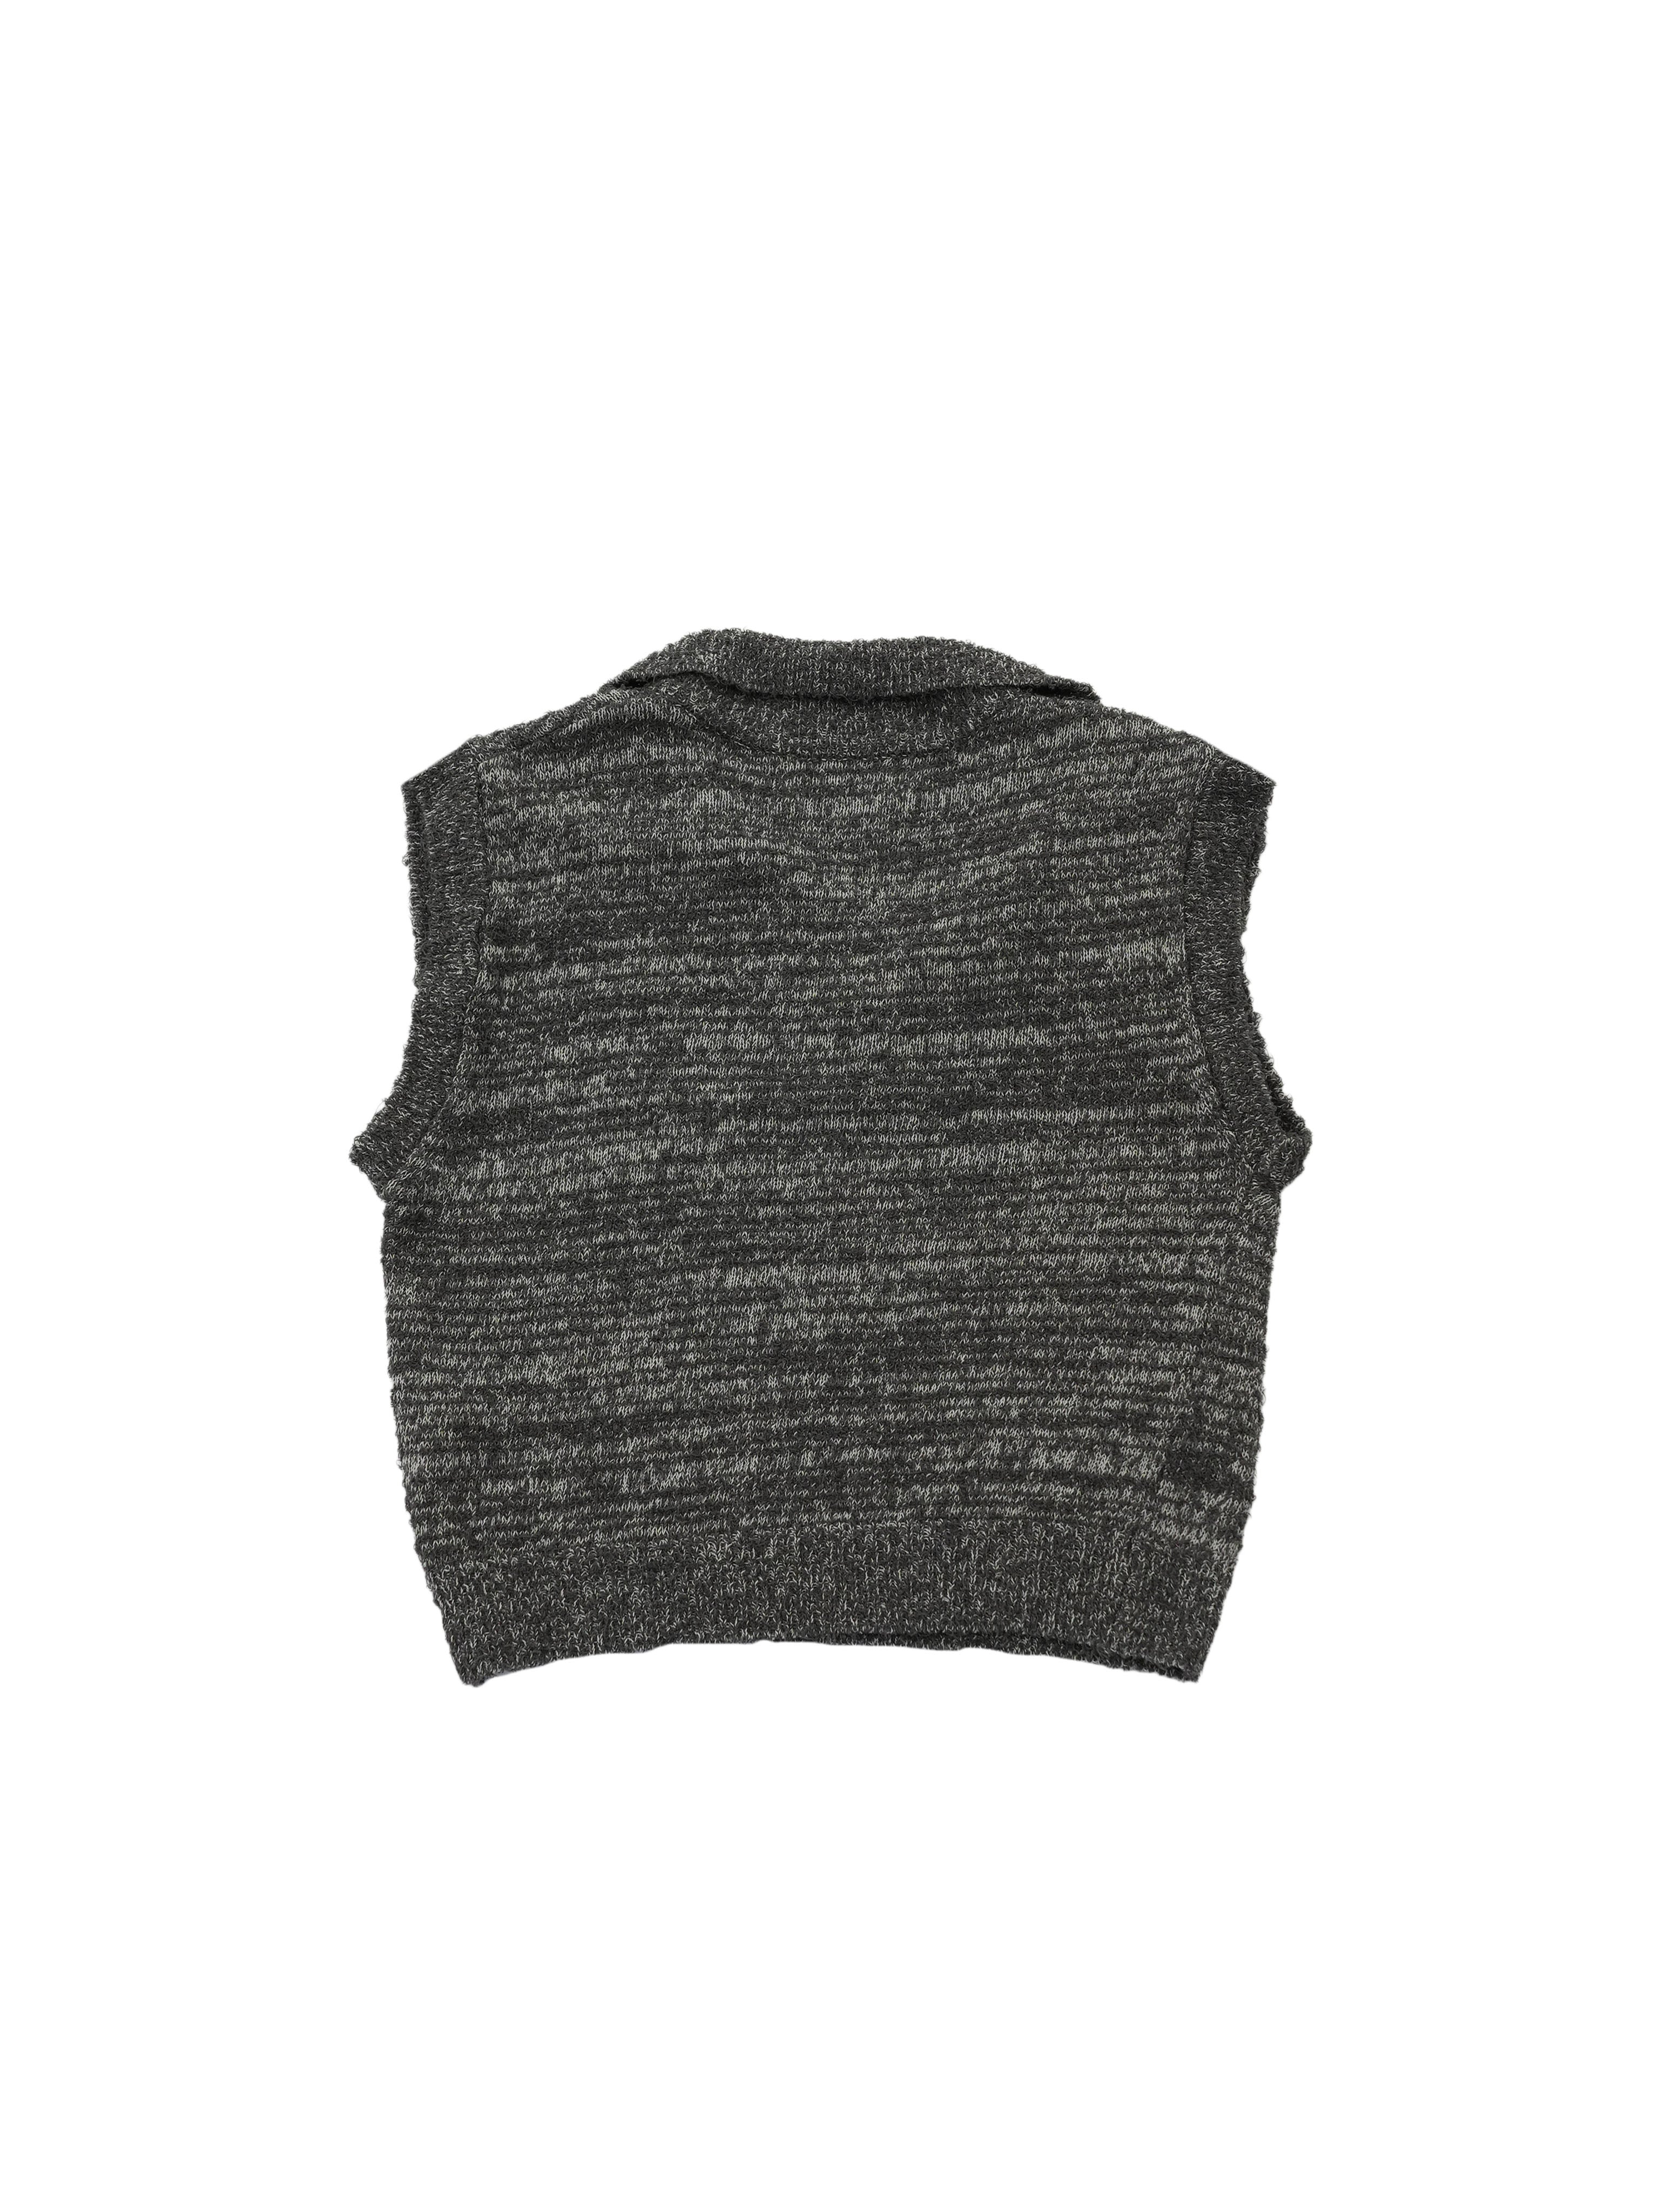 collar knit vest